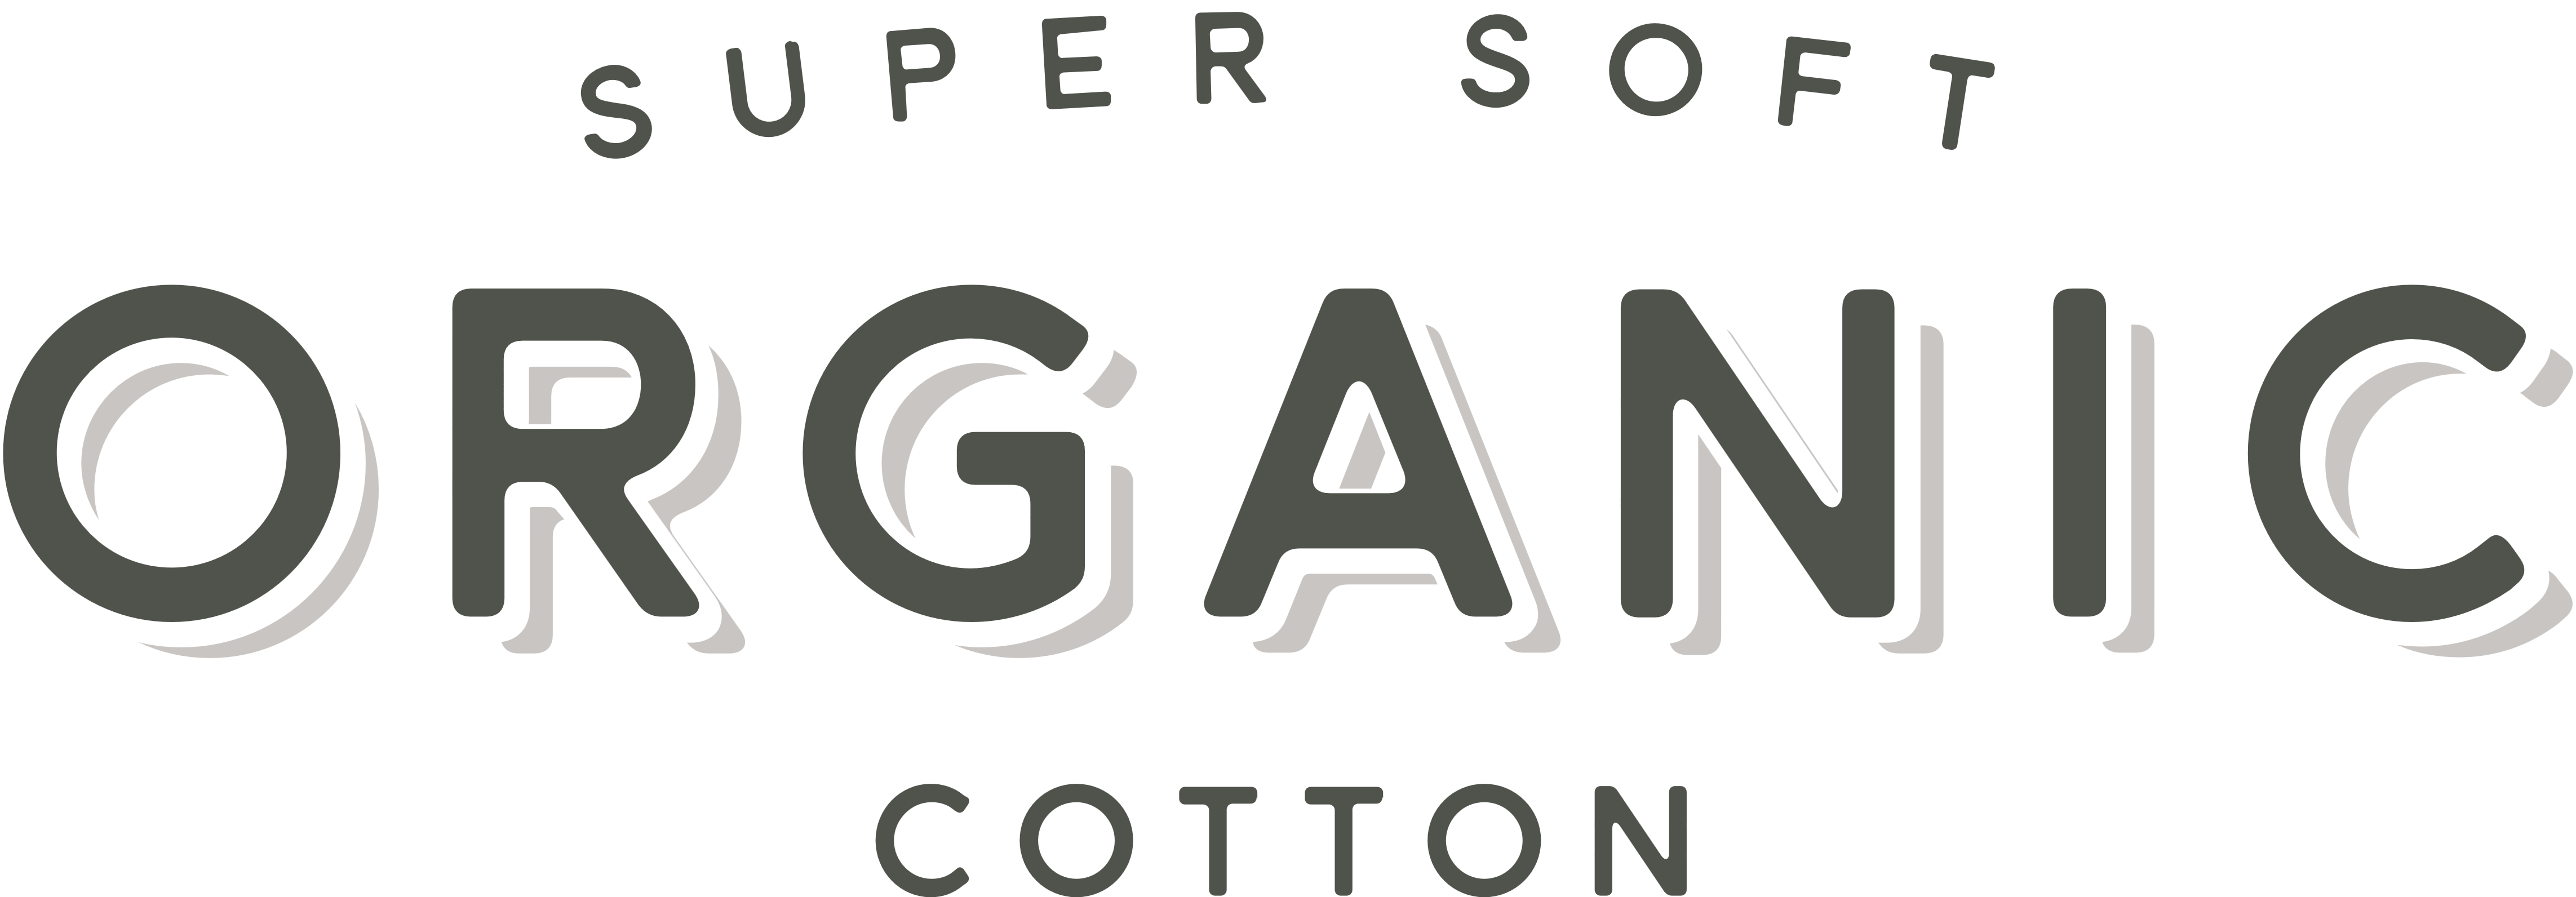 Super Soft Organic Cotton – Logos Download